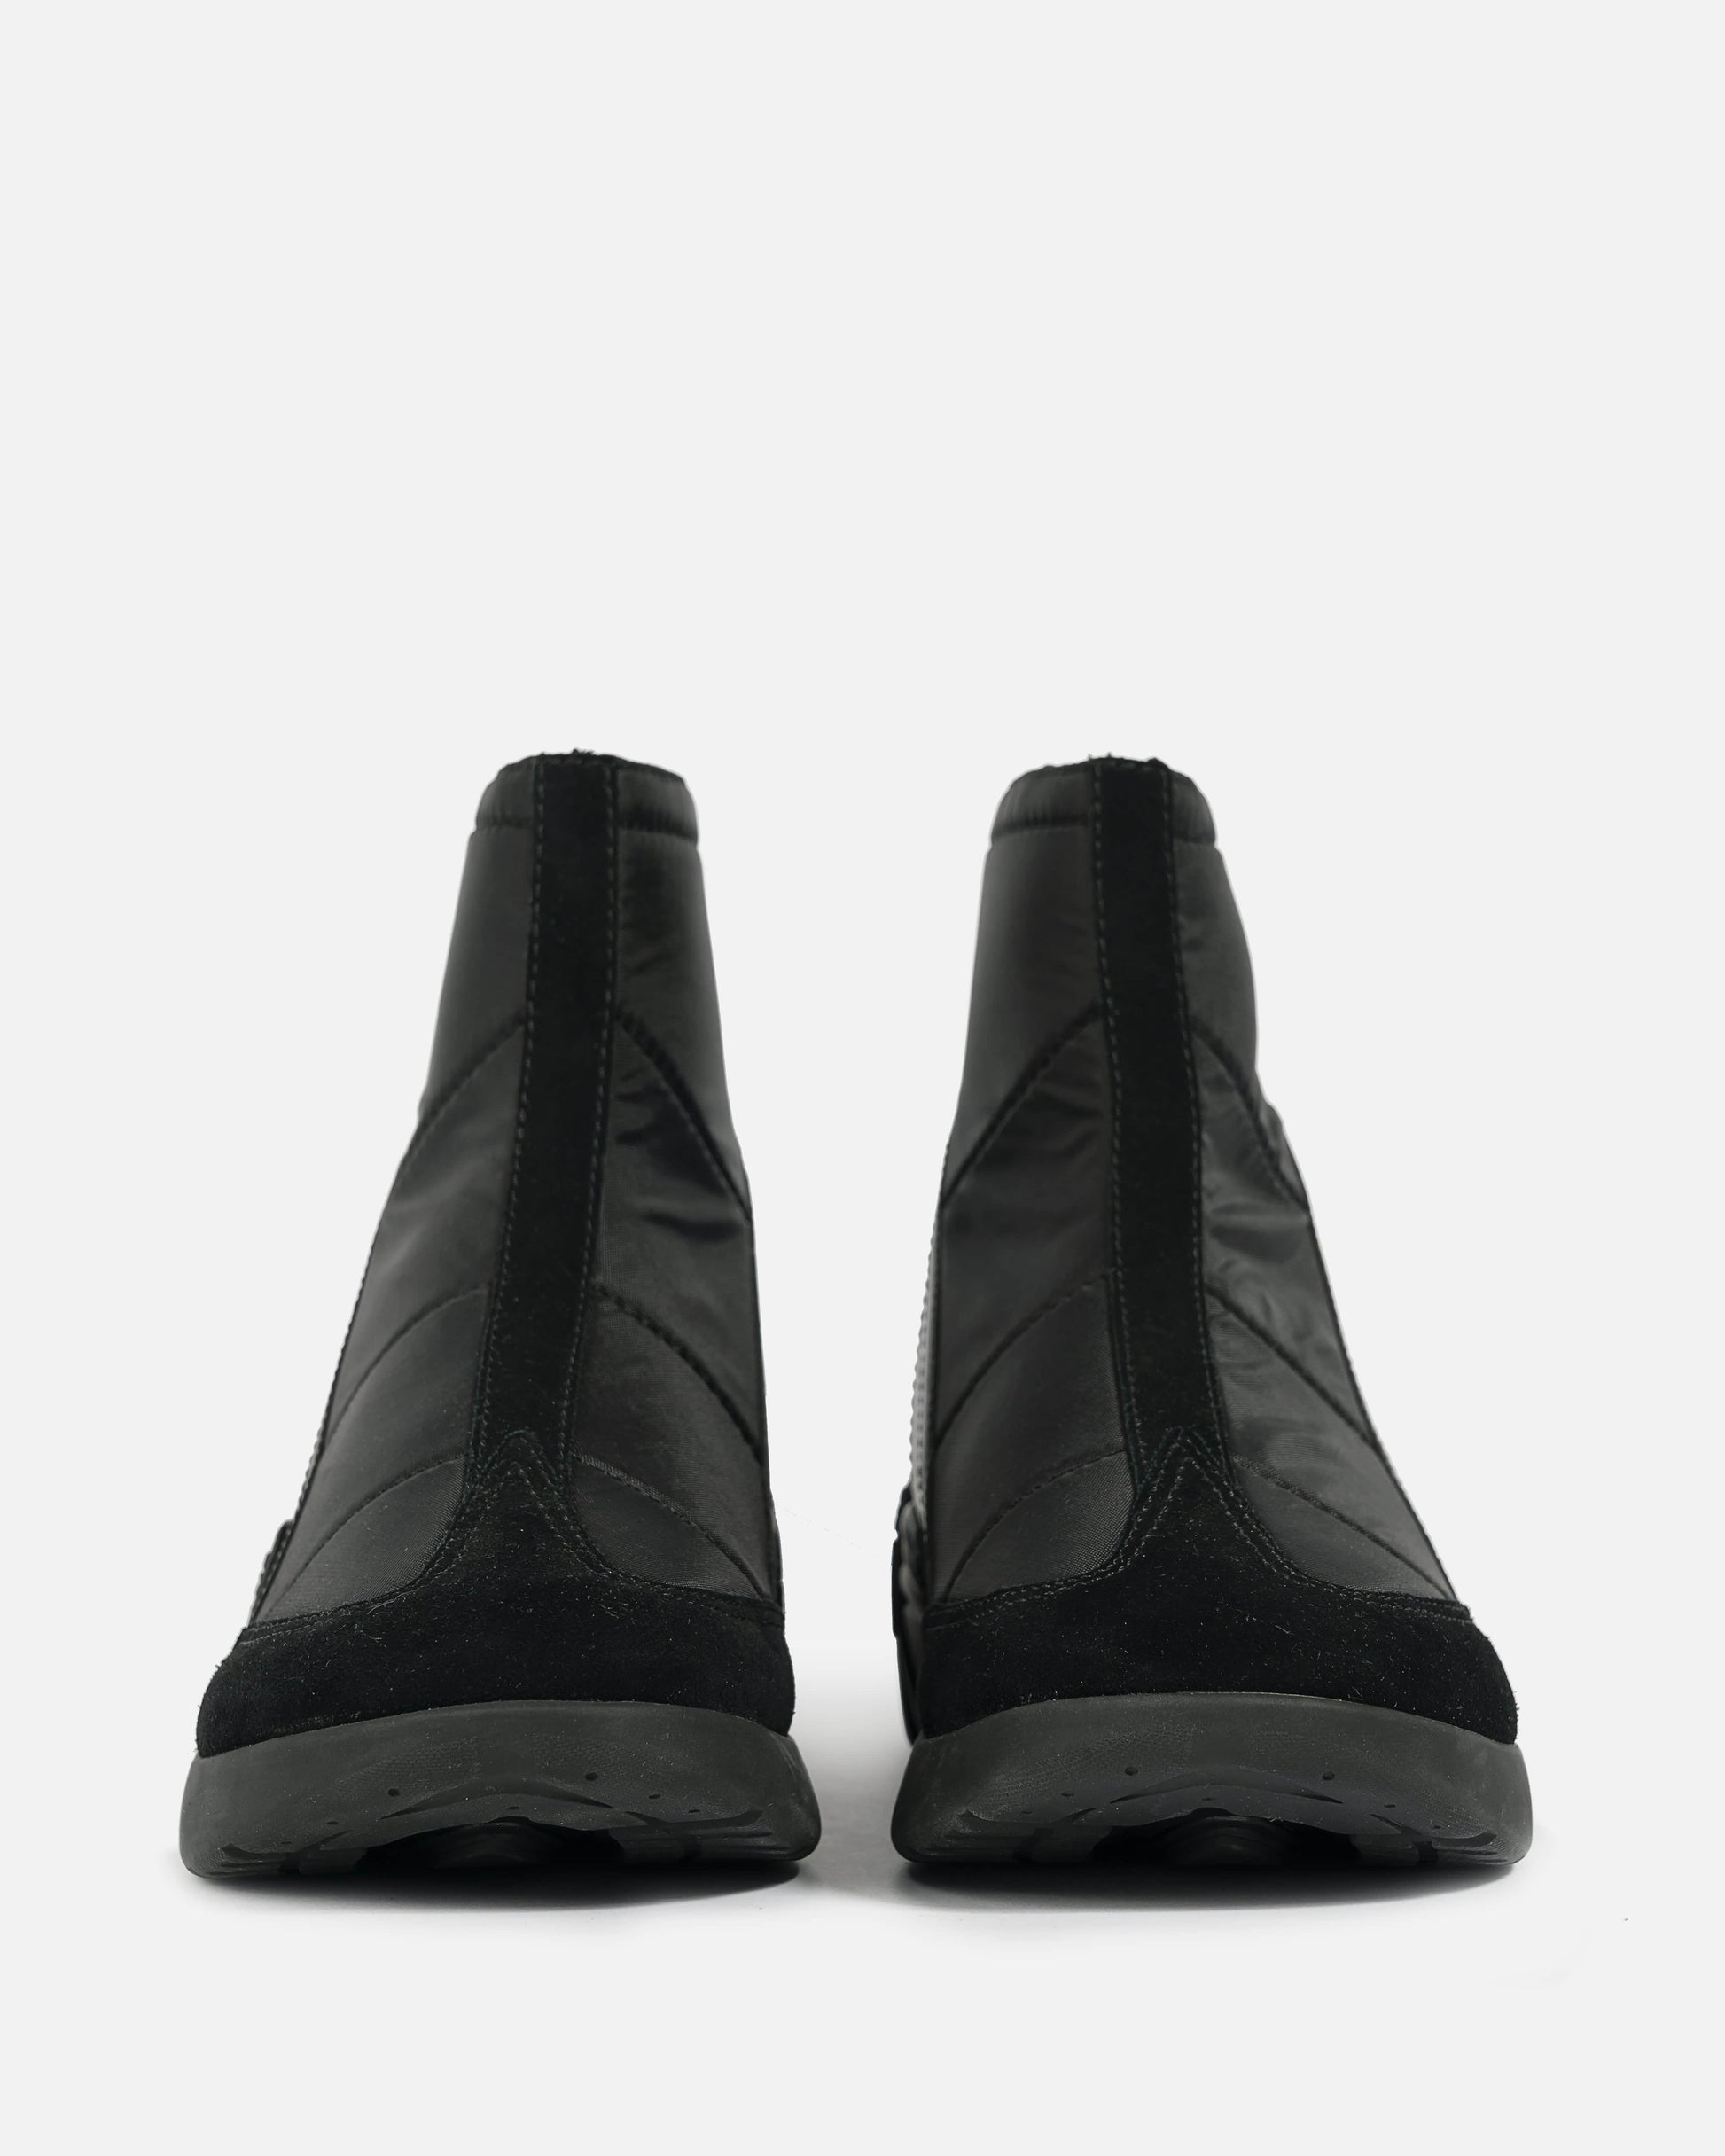 Raf Simons Men's Boots Cylon-22 in Black